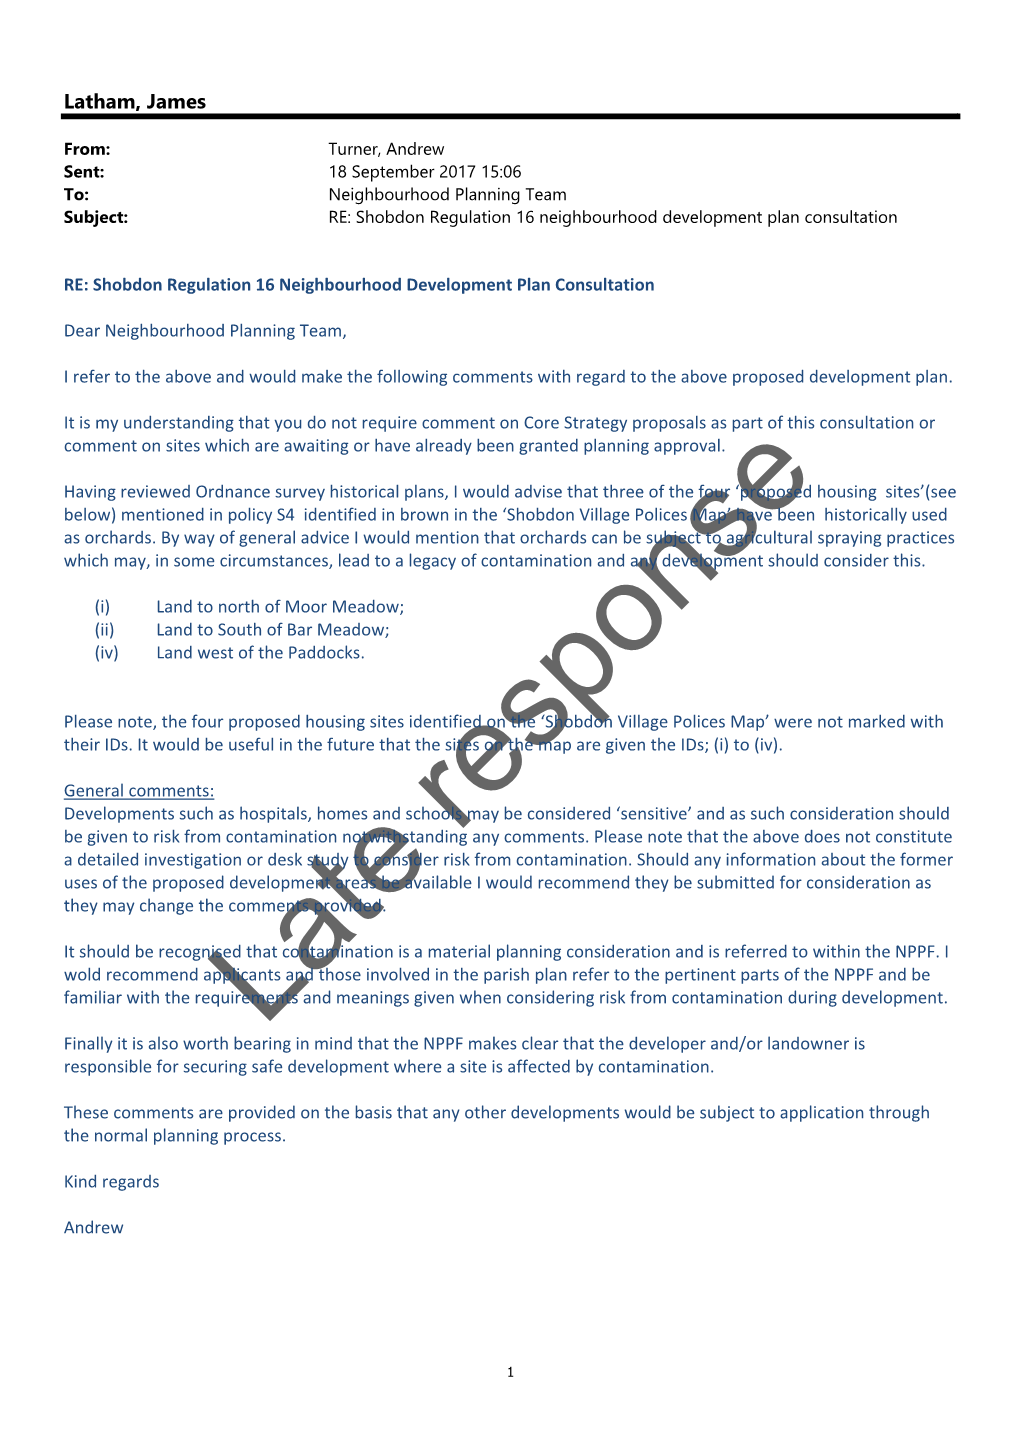 Responses to Shobdon Regulation 16 Resubmission Consultation